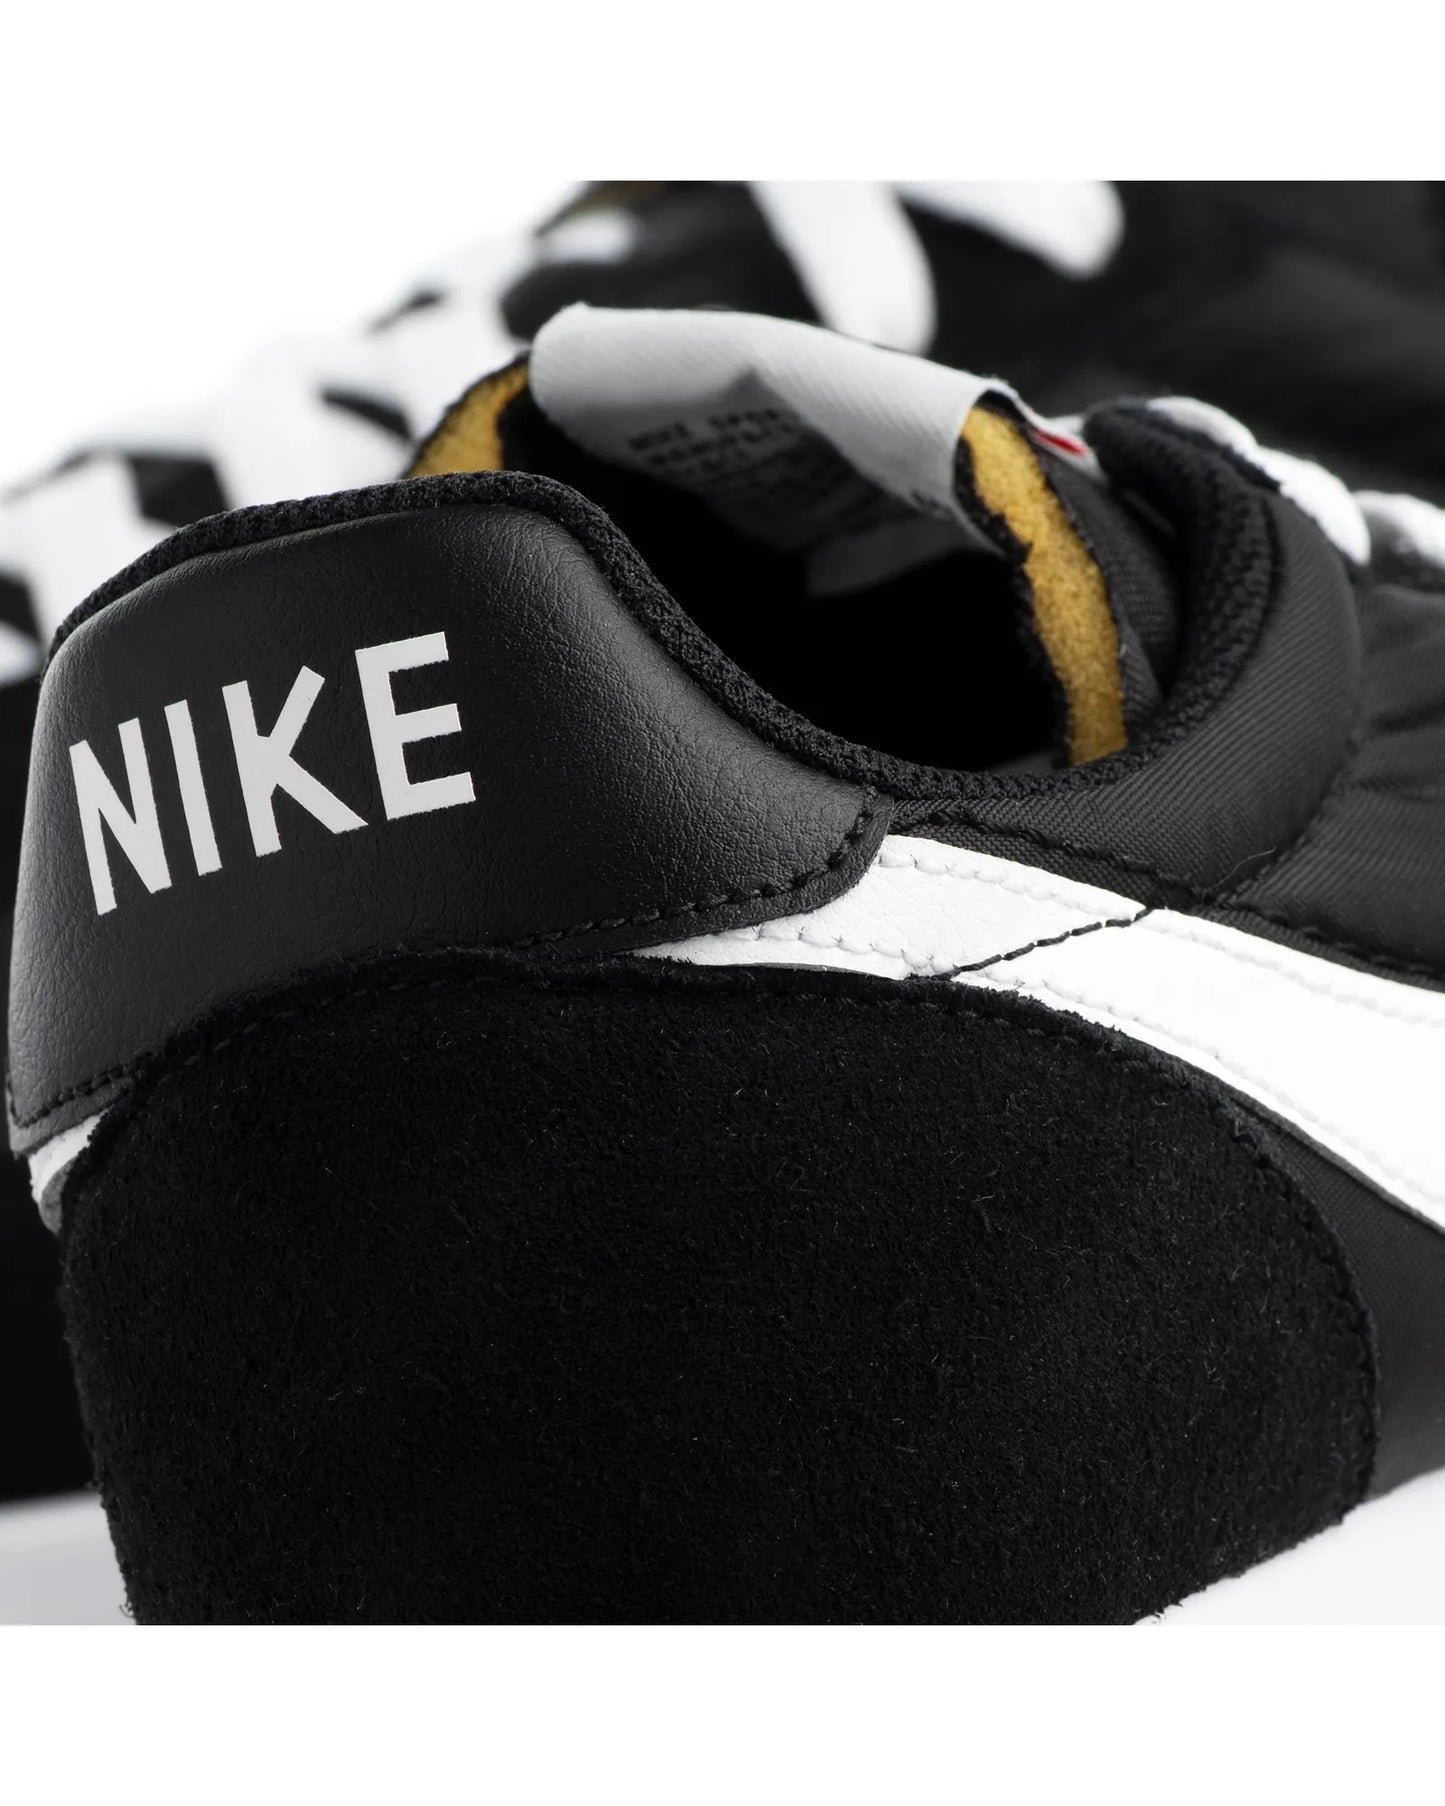 Nike Air Tailwind 79 Black White Team Orange 487754-012 Men's Sneakers Size 10.5